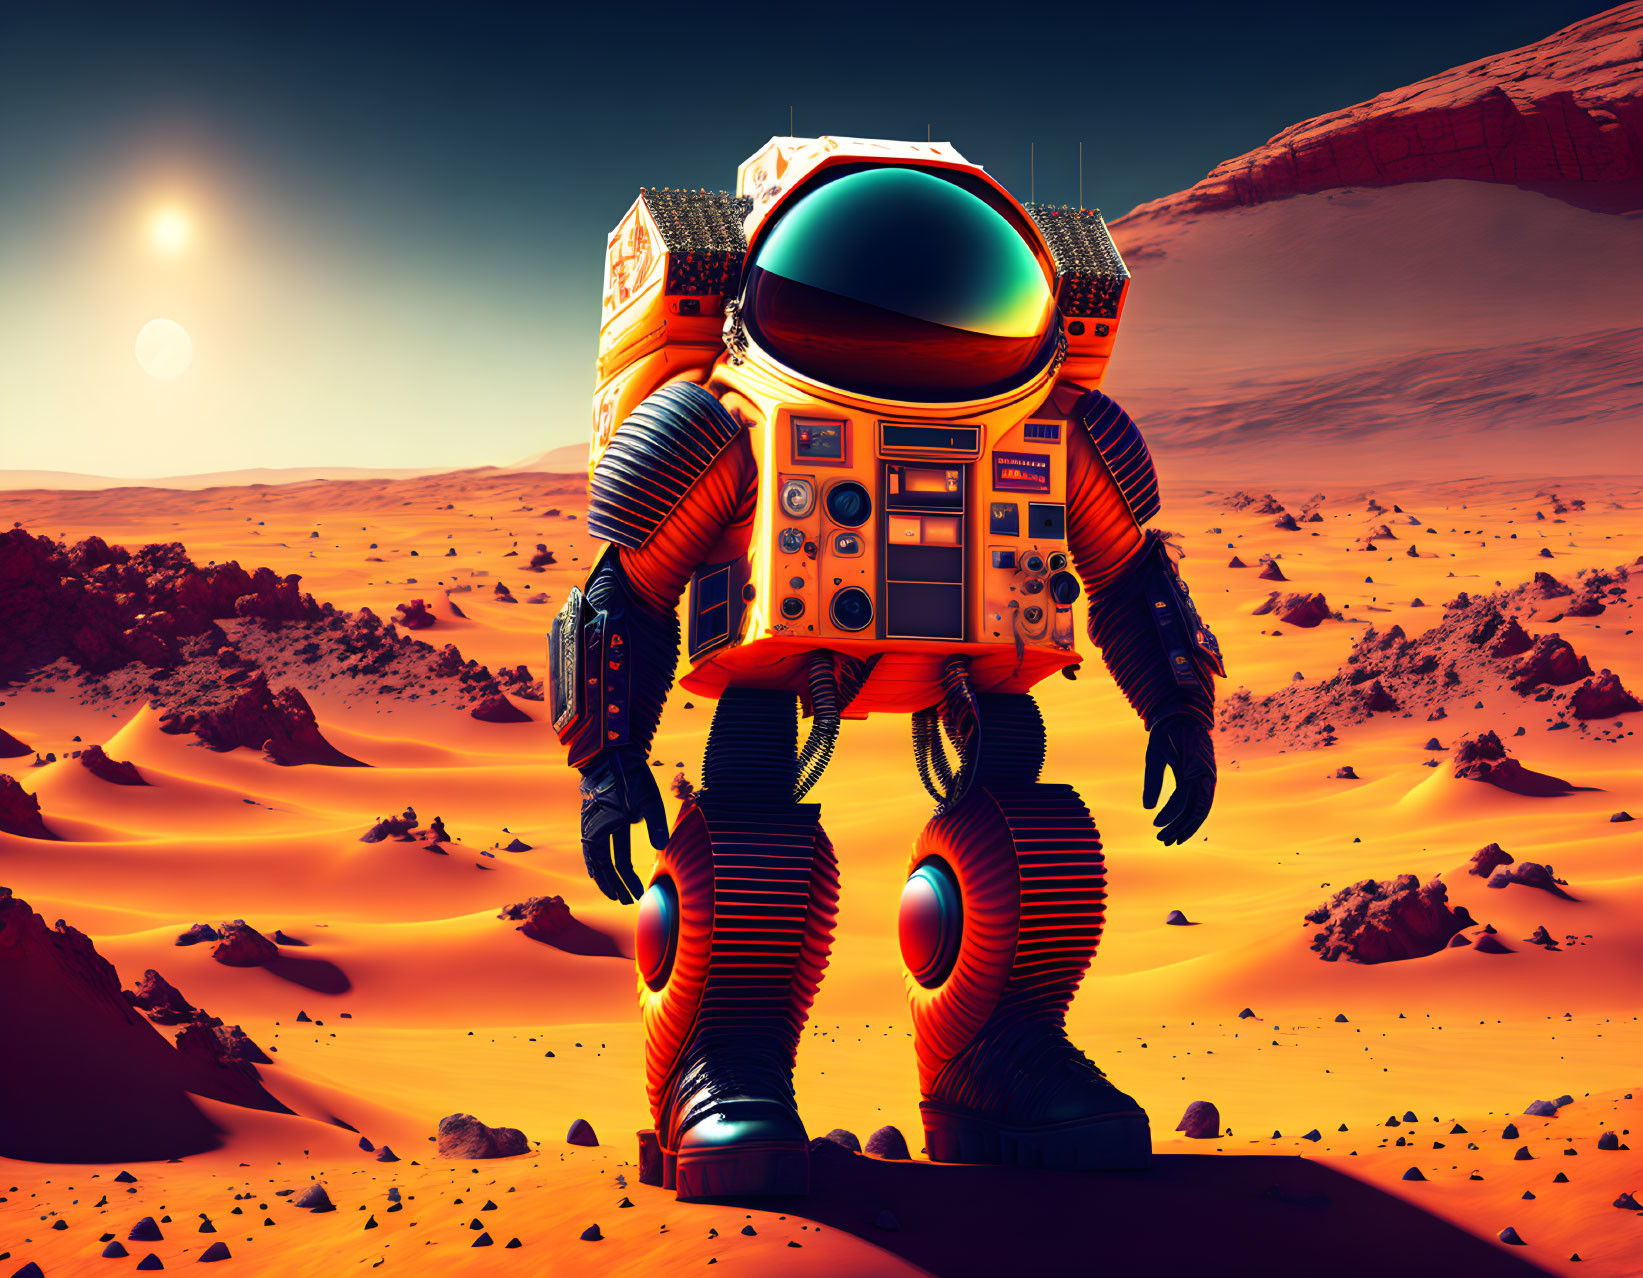 Astronaut exploring Mars-like terrain at sunset